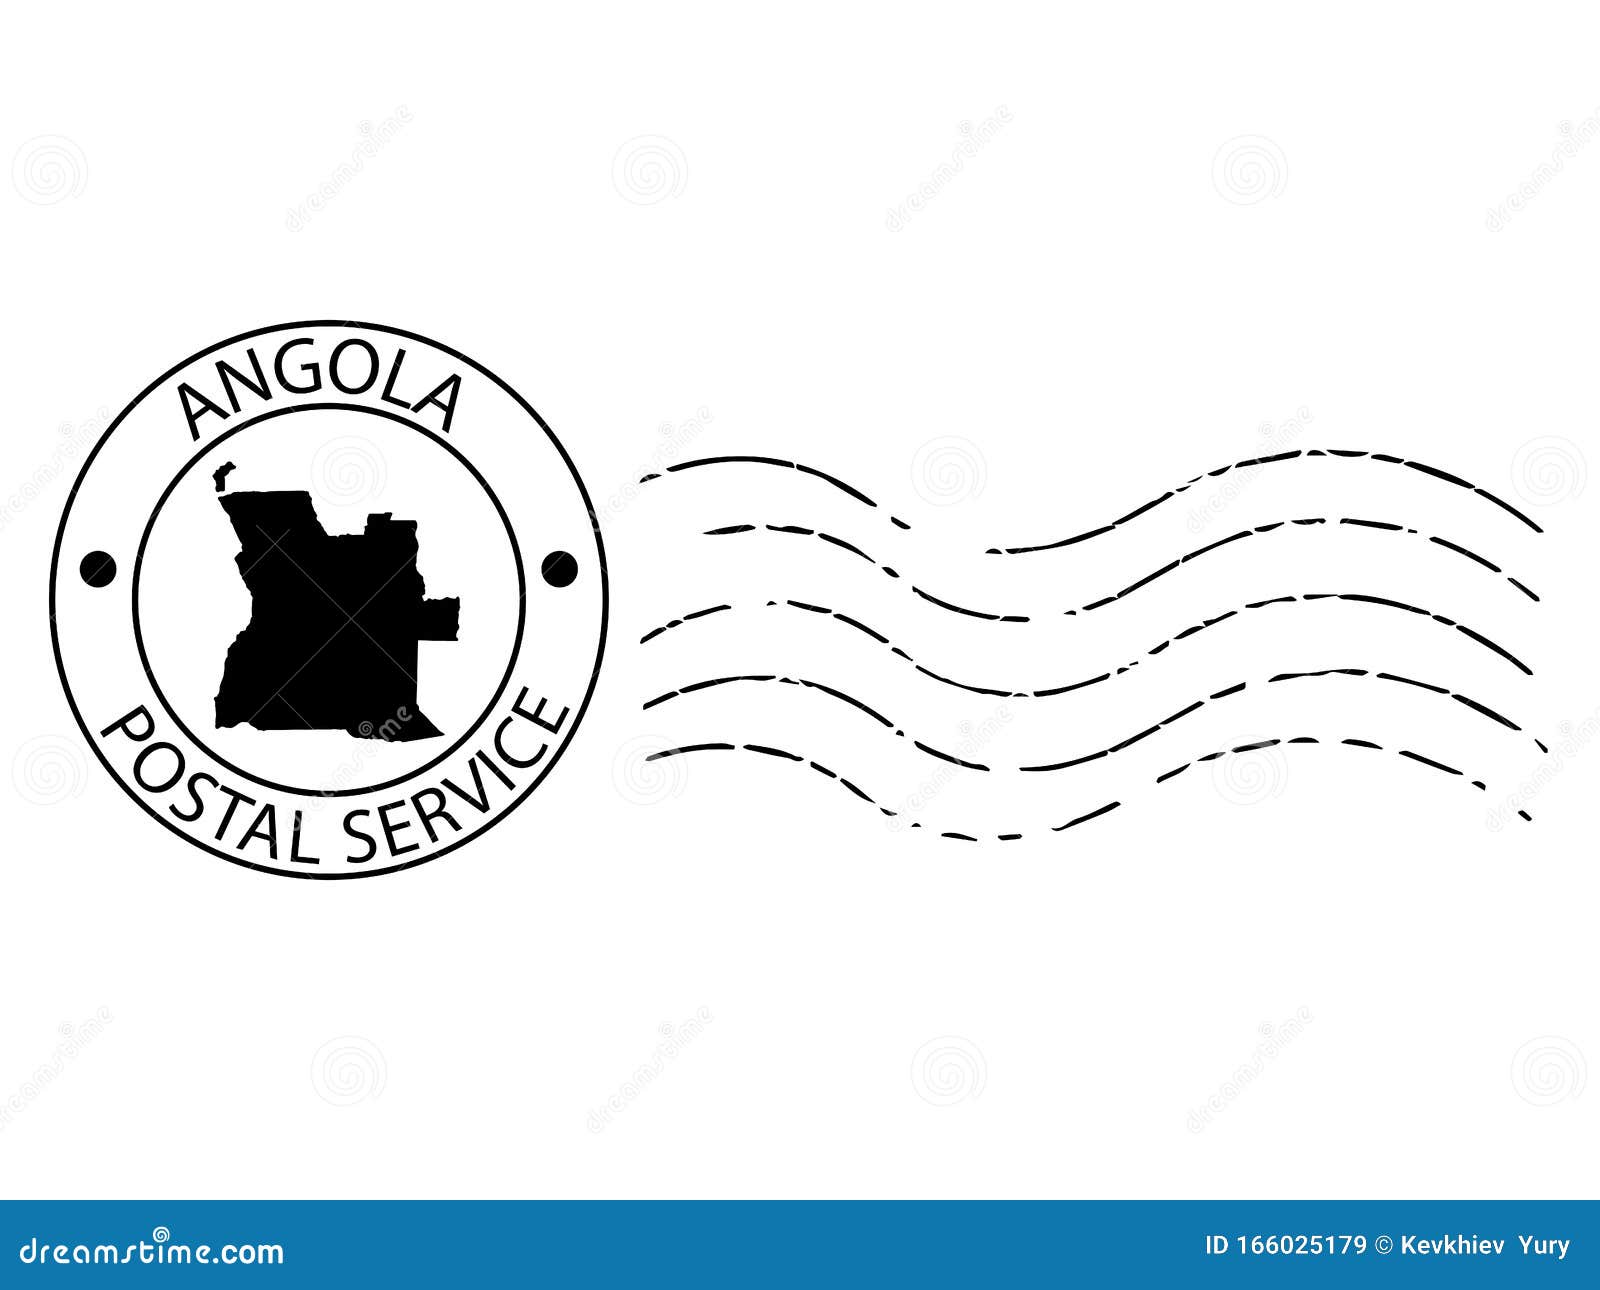 Angola Postal Stamp Vector Illustration Eps 10 Stock Vector ...